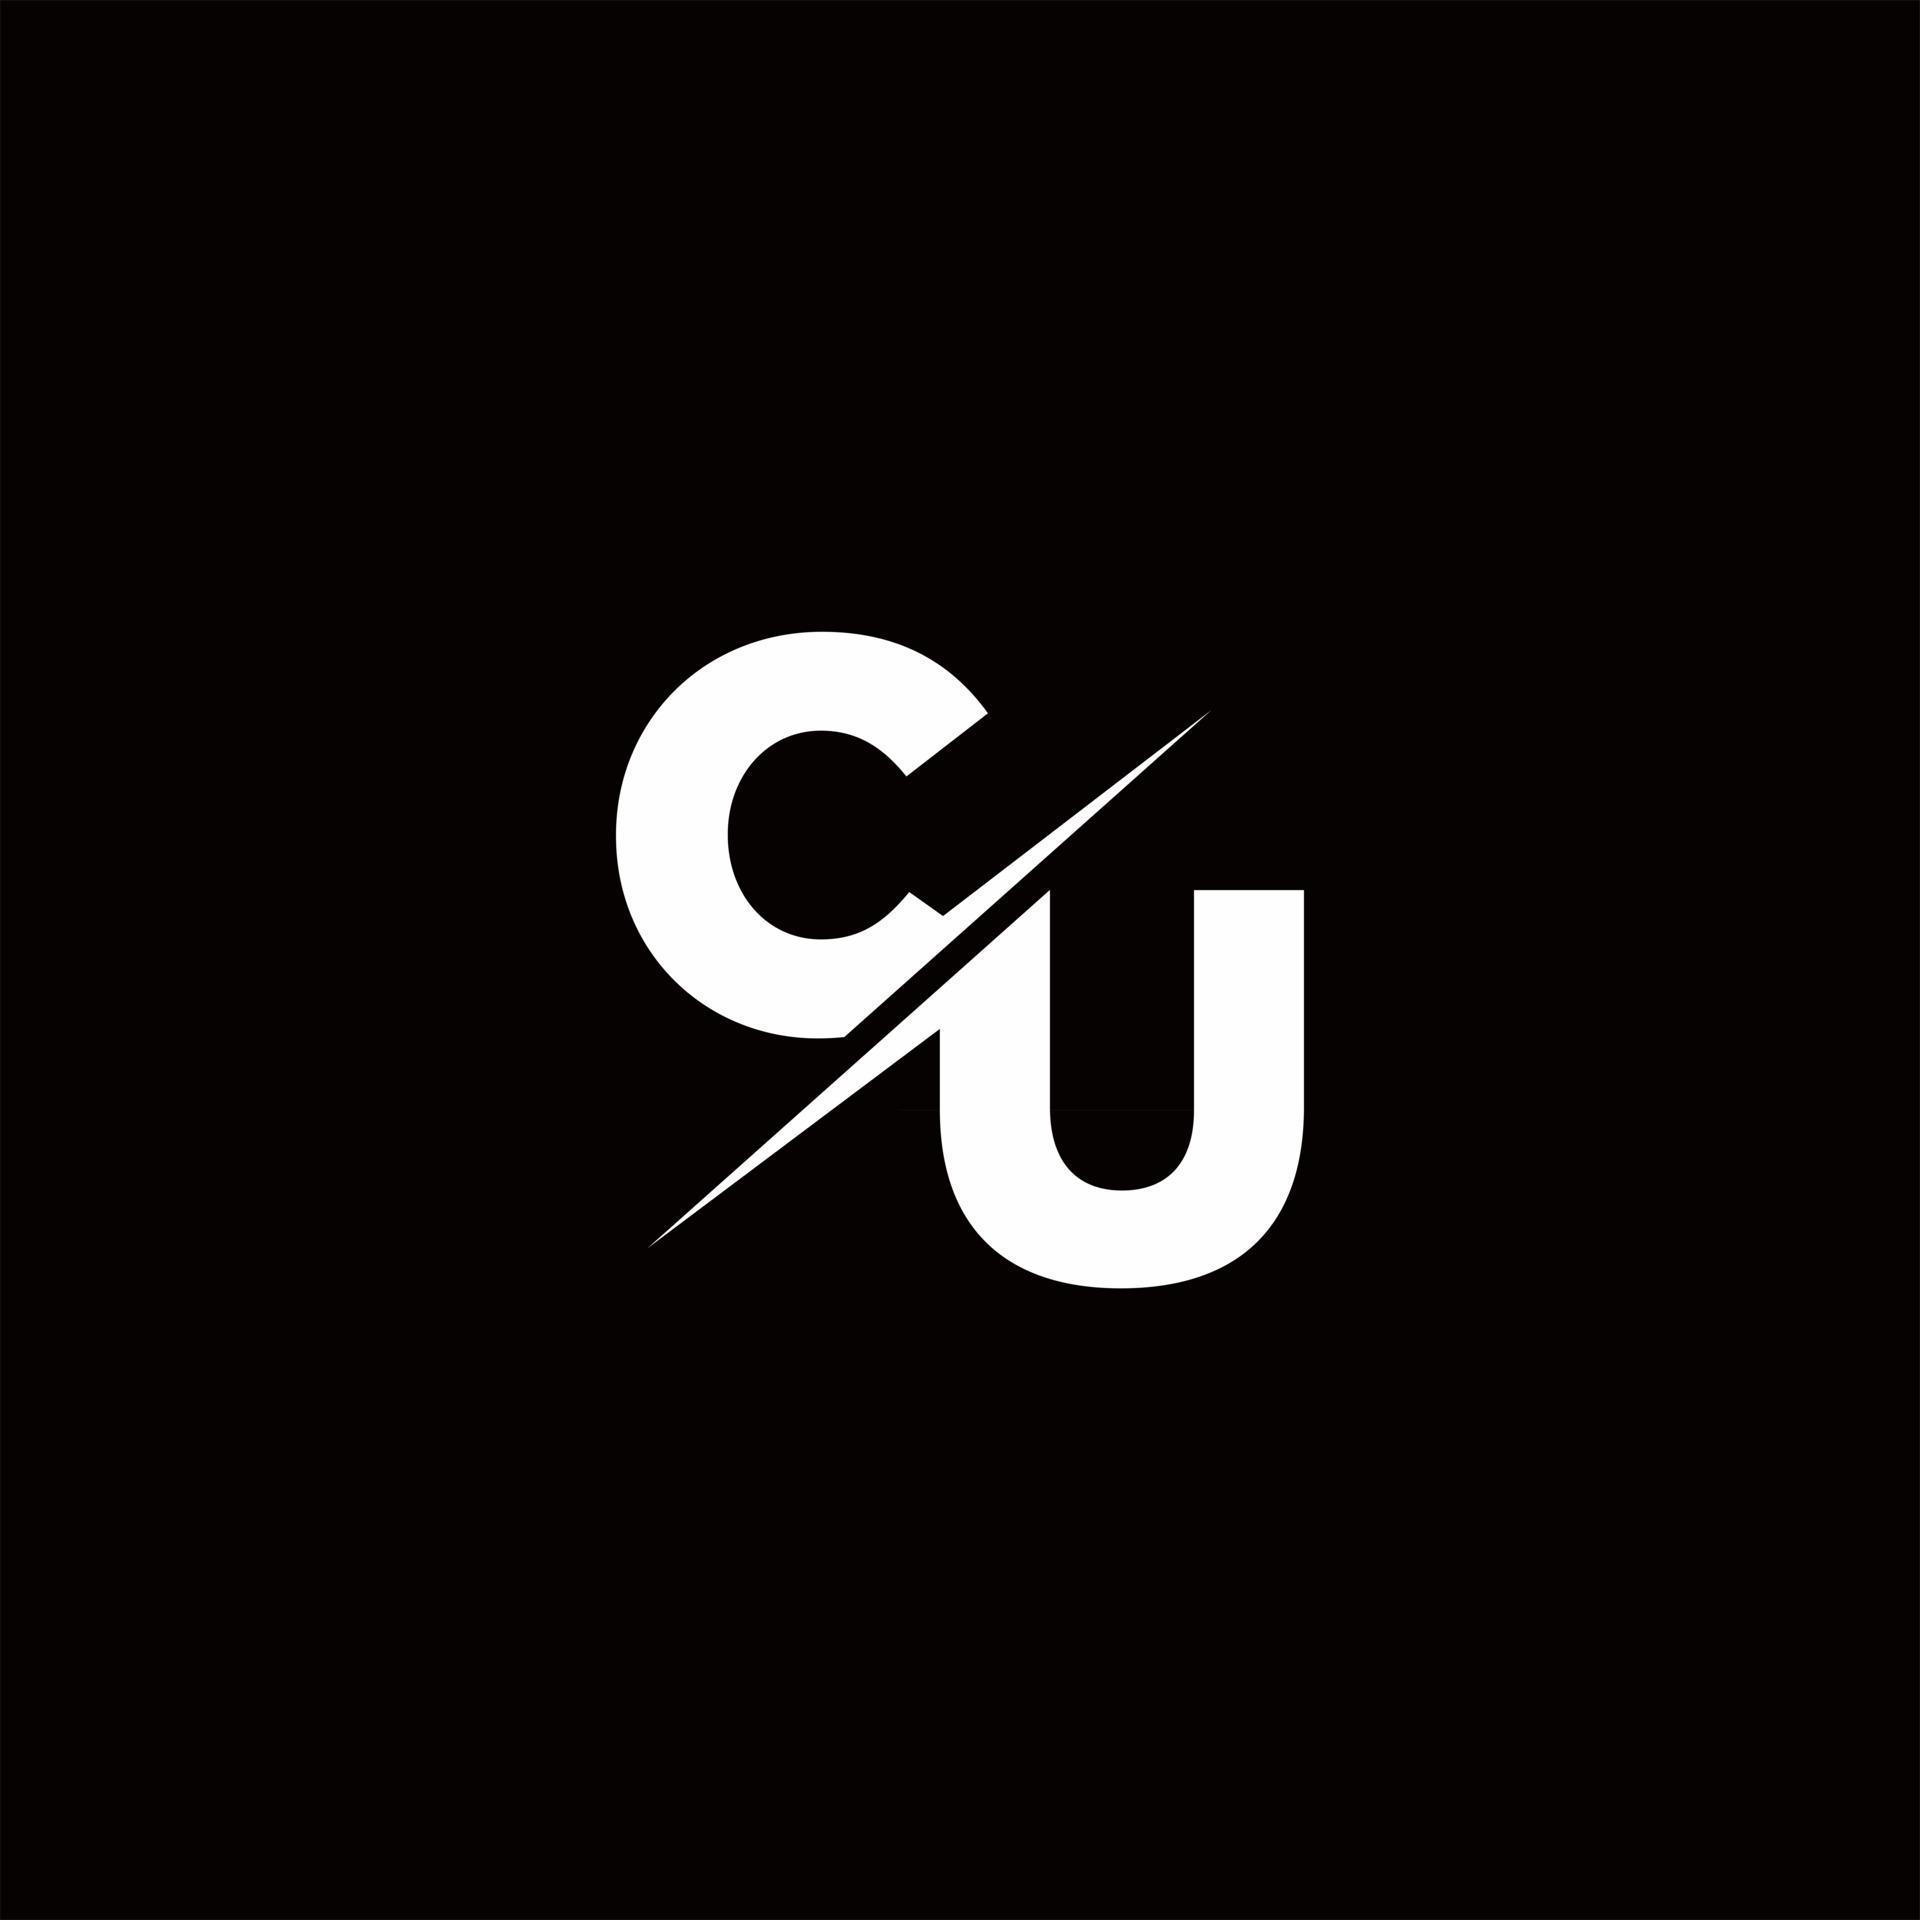 CU Logo Letter Monogram Slash with Modern logo designs template vector